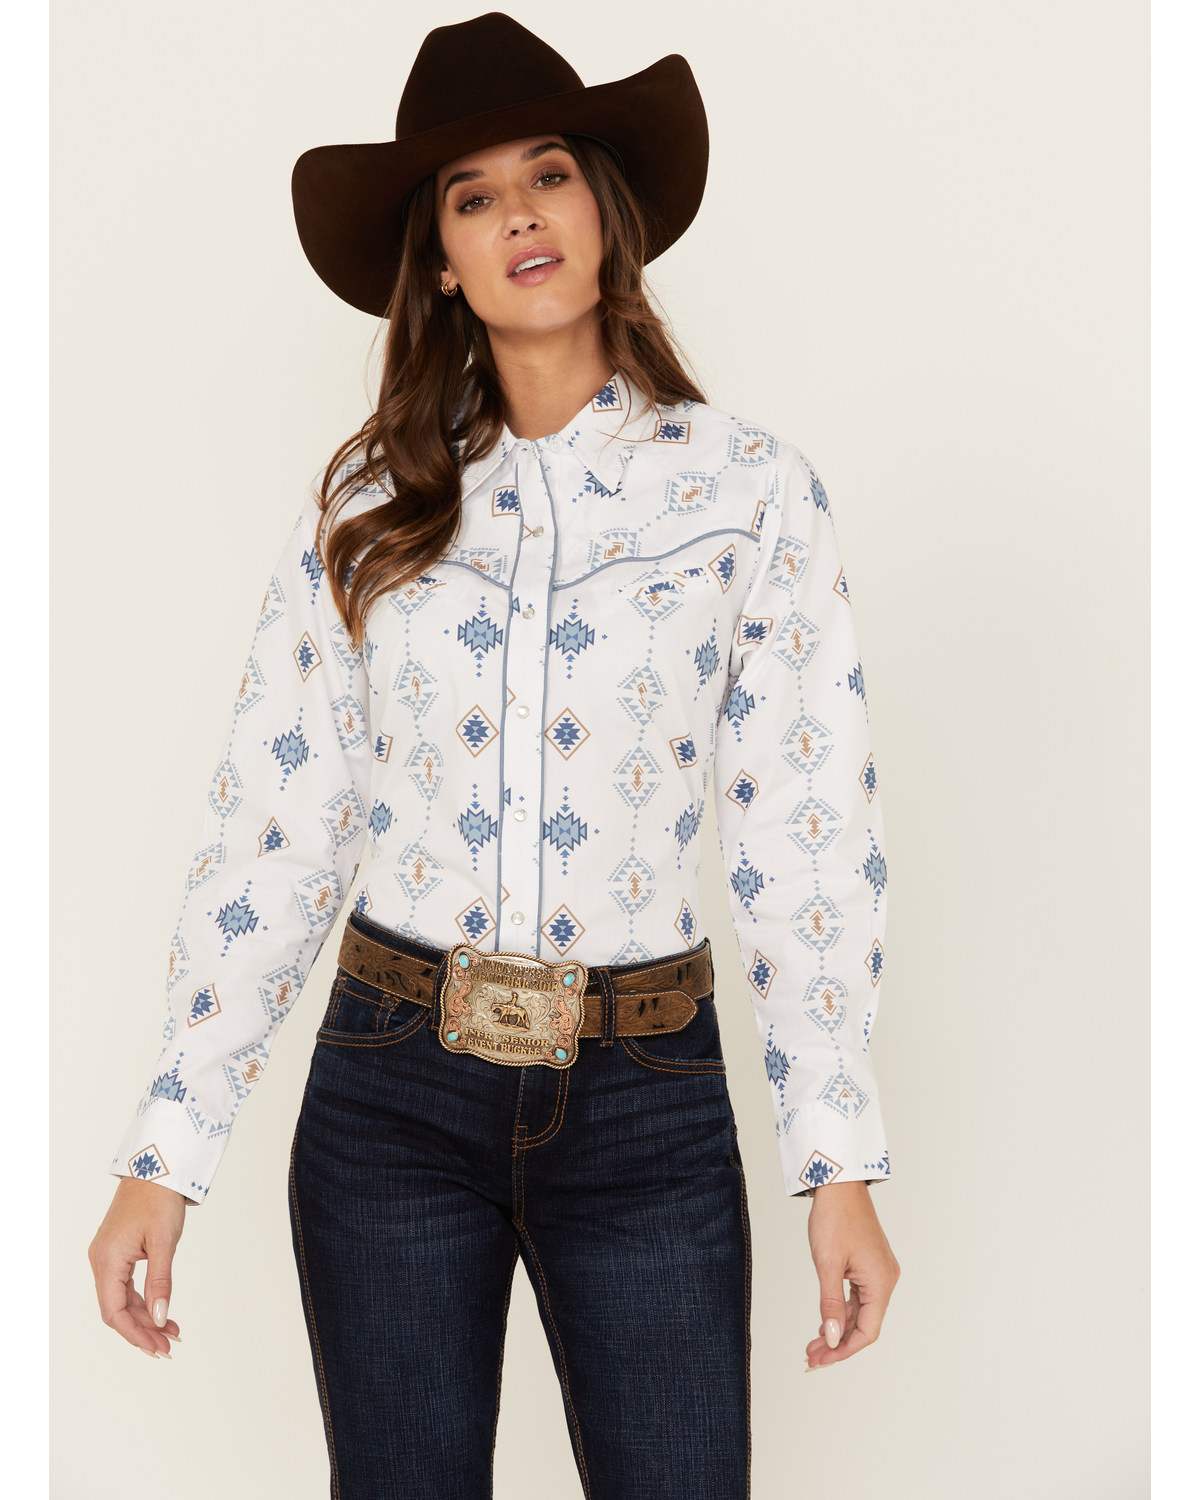 Ely Walker Women's Southwestern Print Long Sleeve Pearl Snap Western Shirt